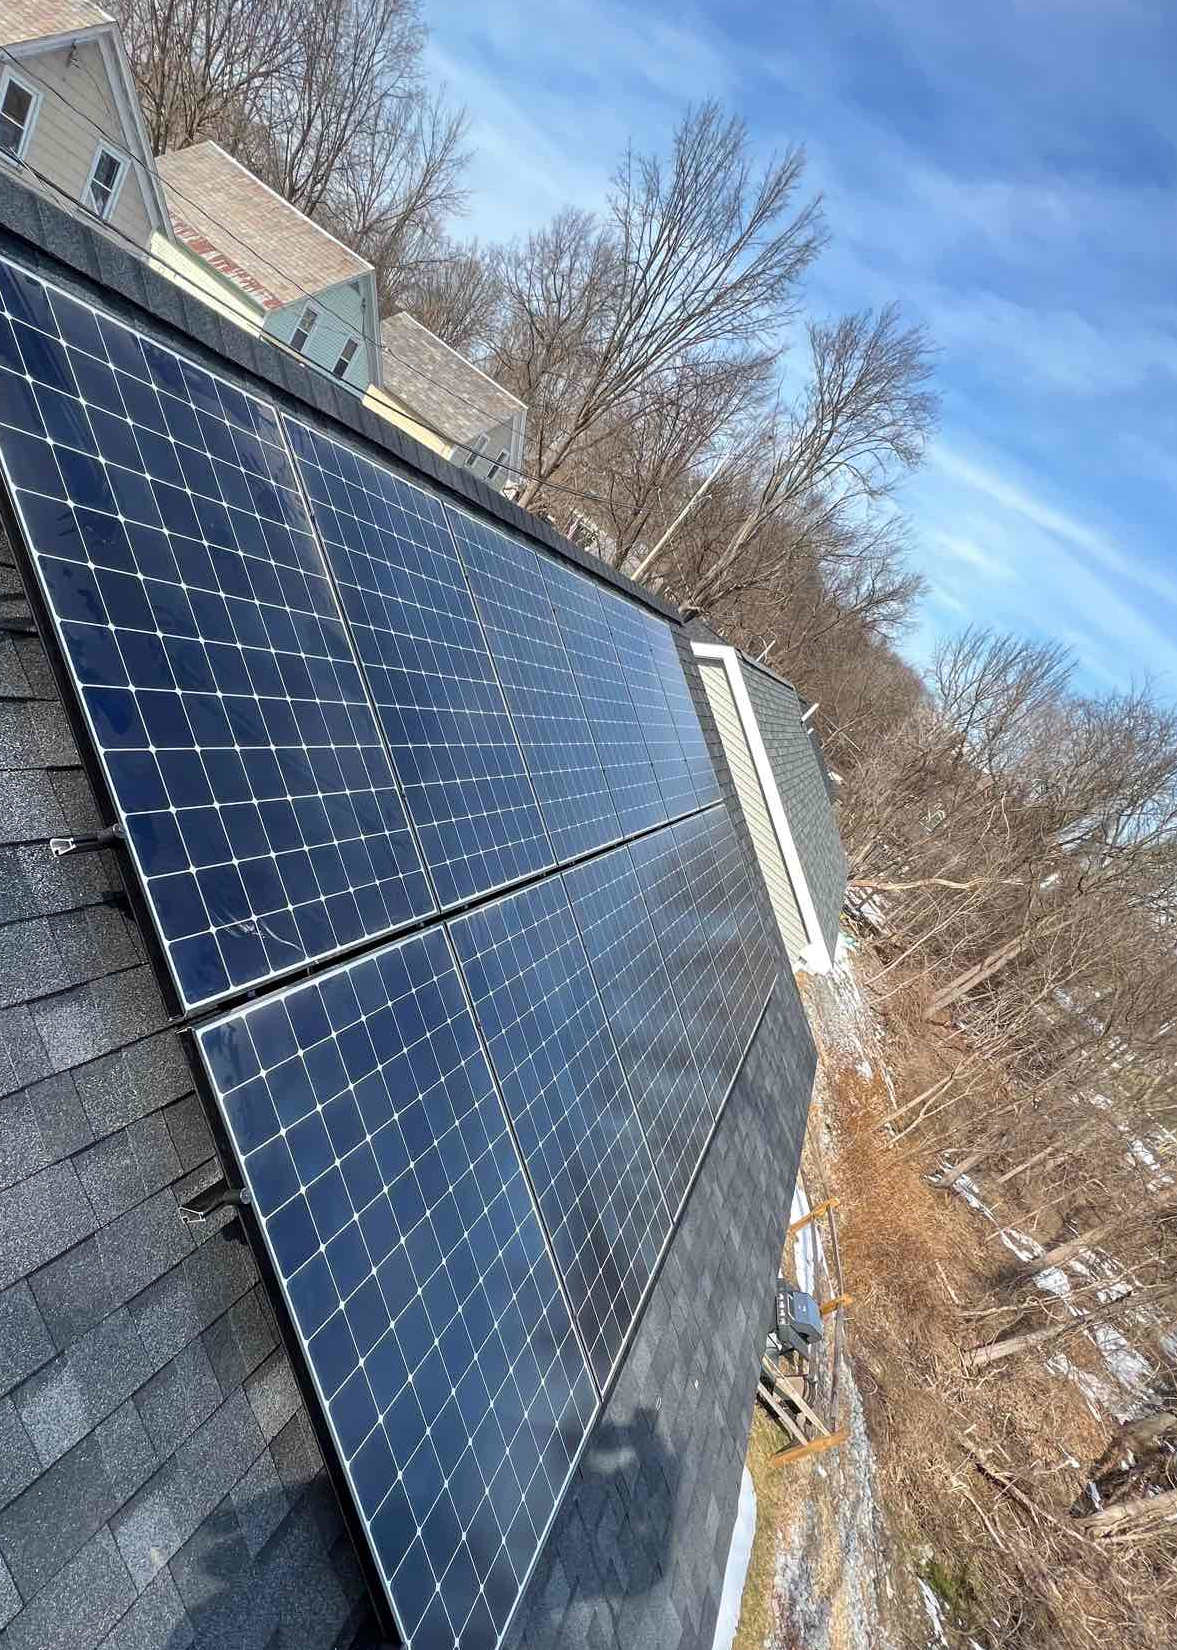 Habitat for Humanity goes solar in Glens Falls